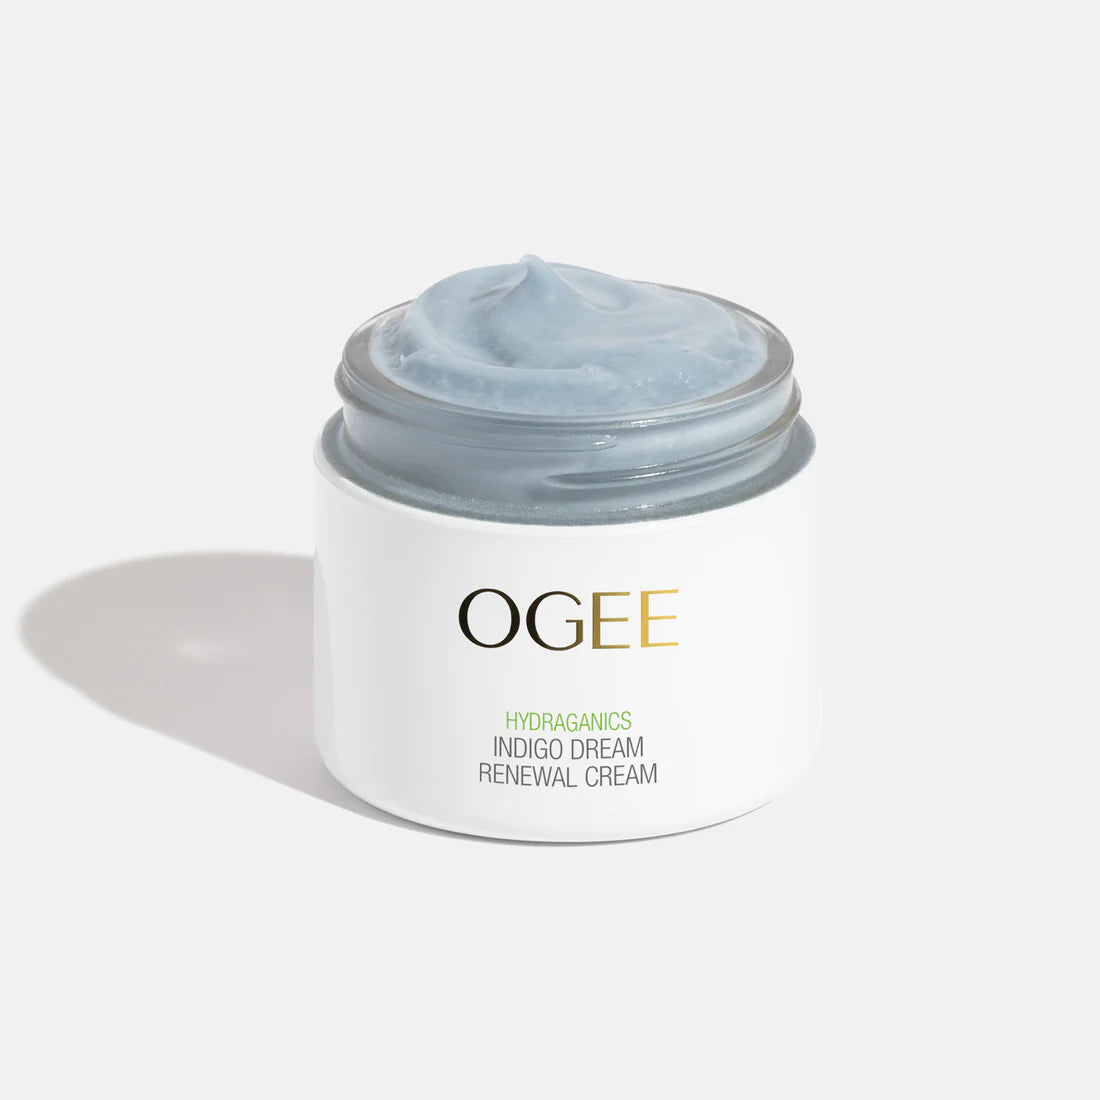 OGEE Indigo Dream Renewal Cream